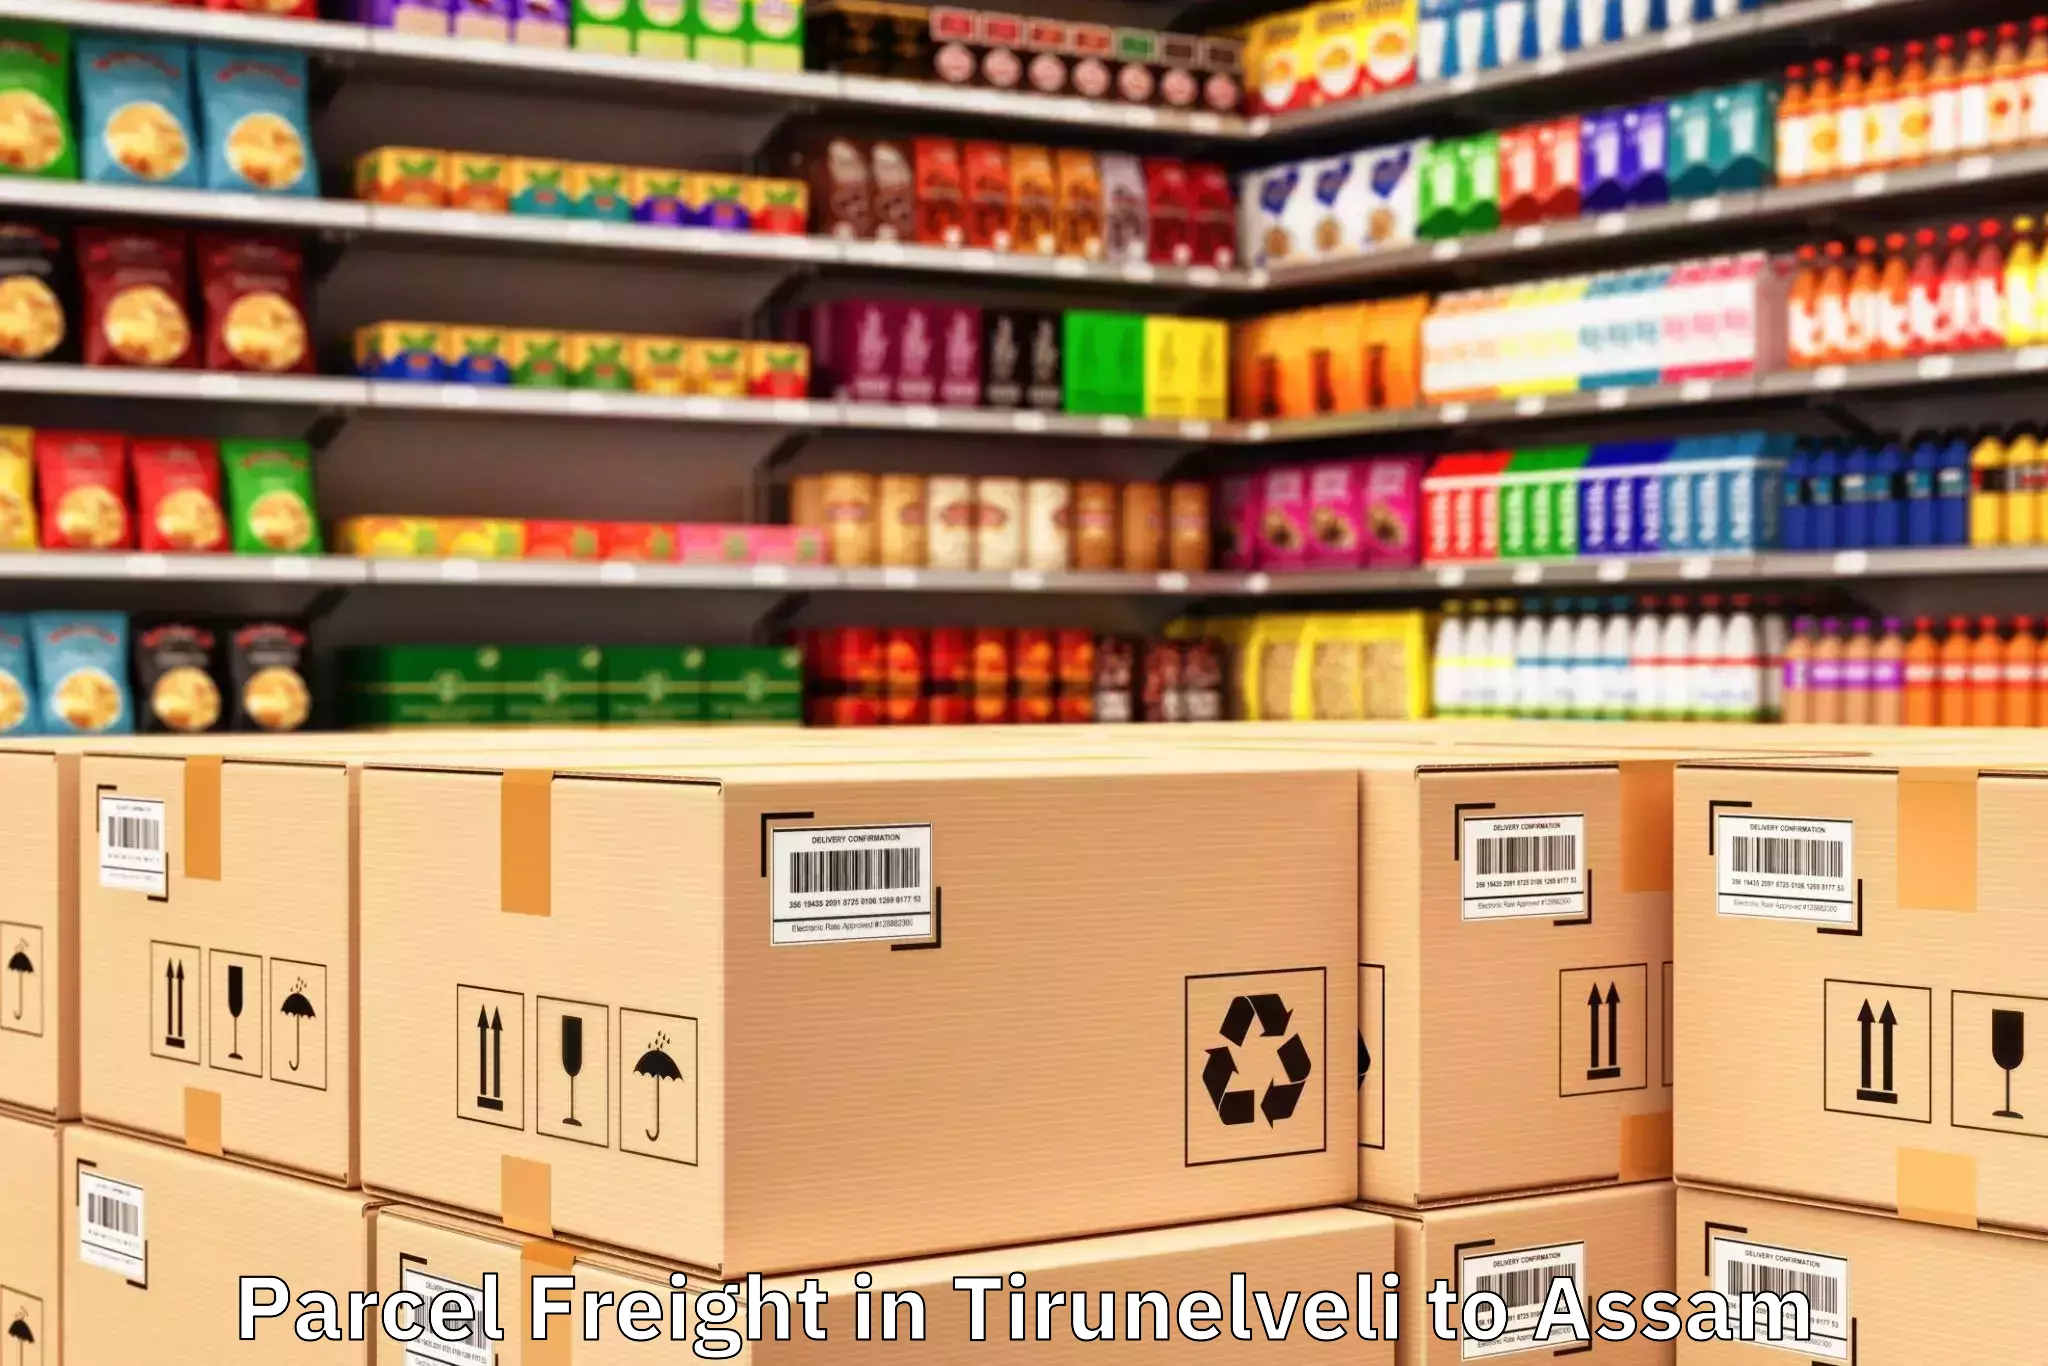 Professional Tirunelveli to Palasbari Parcel Freight